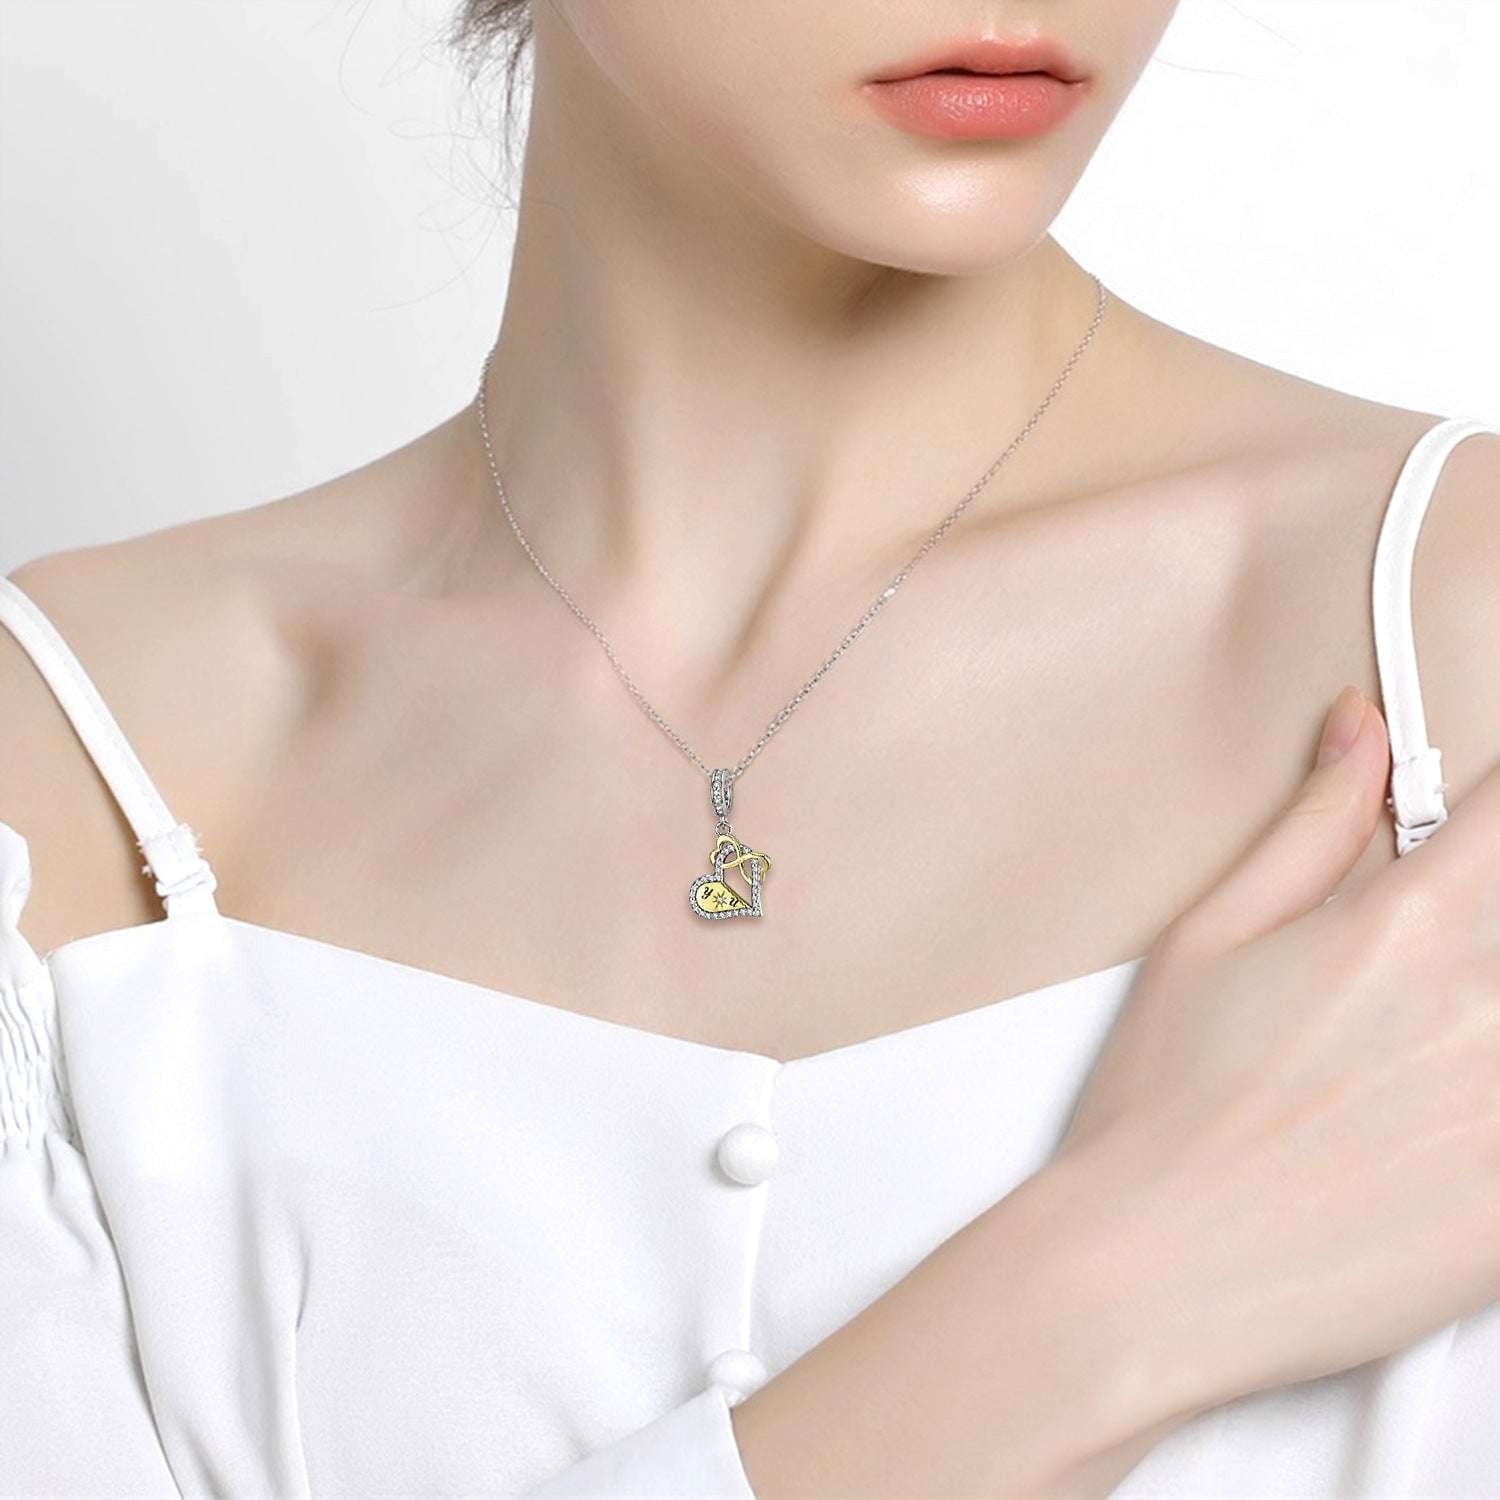 Elegant Charm Pendant, Sterling Silver Bracelet, Women's Bracelet Accessory - available at Sparq Mart